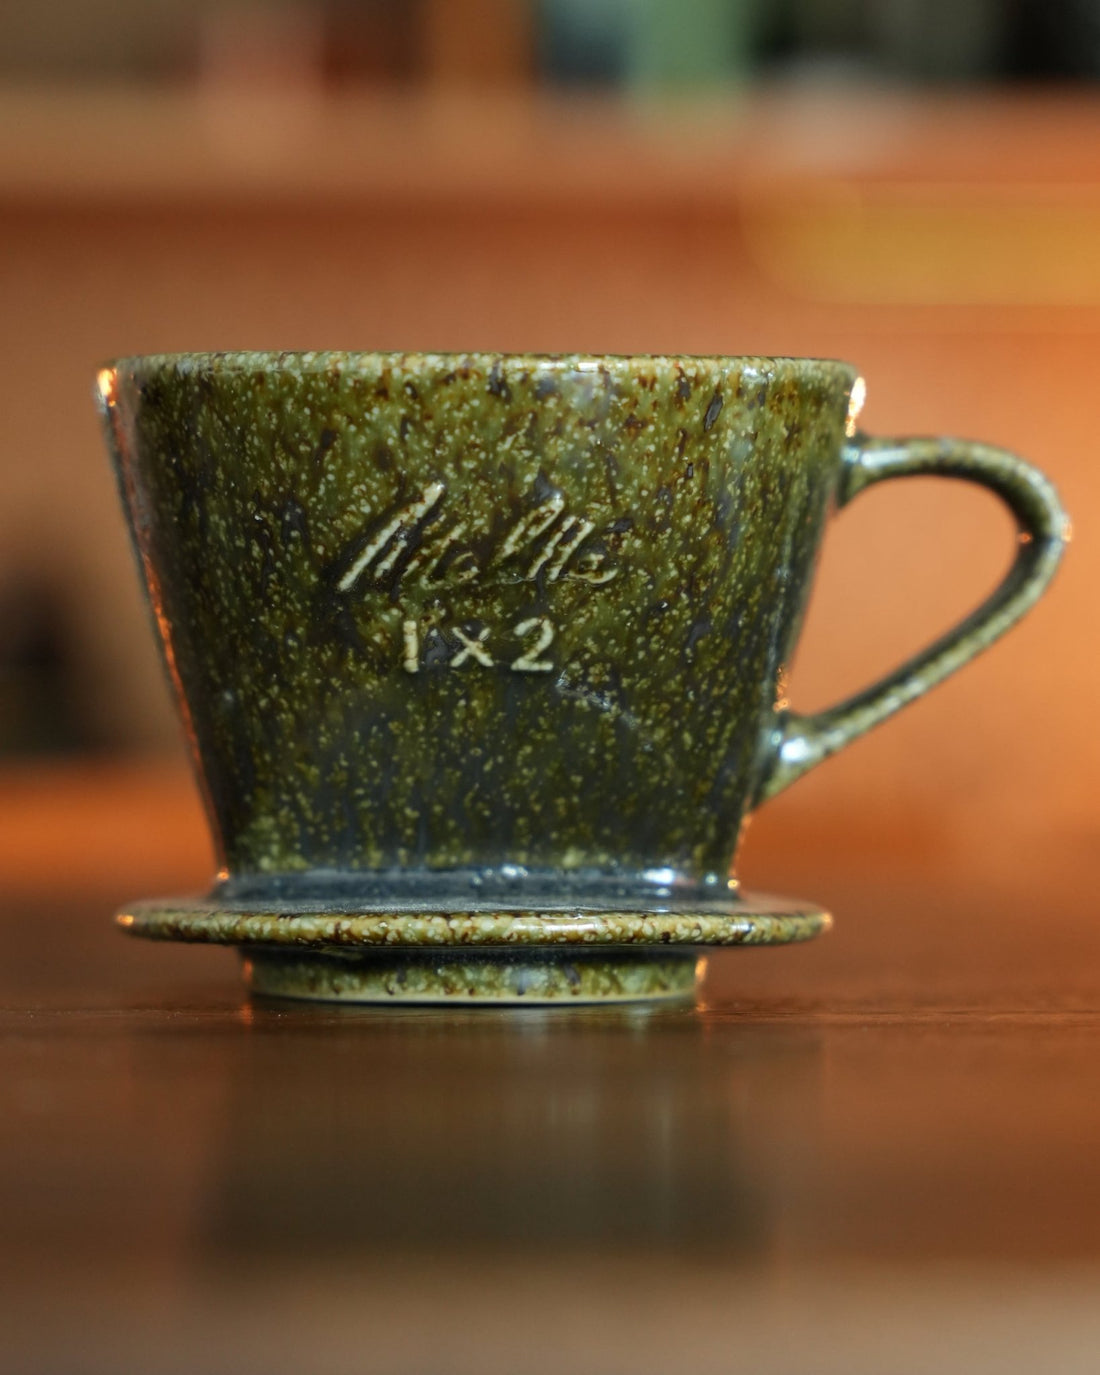 Melitta 黄綠色陶瓷濾杯1x2 SF-P-G1×2 限量色 - Coffee Stage 咖啡舞台